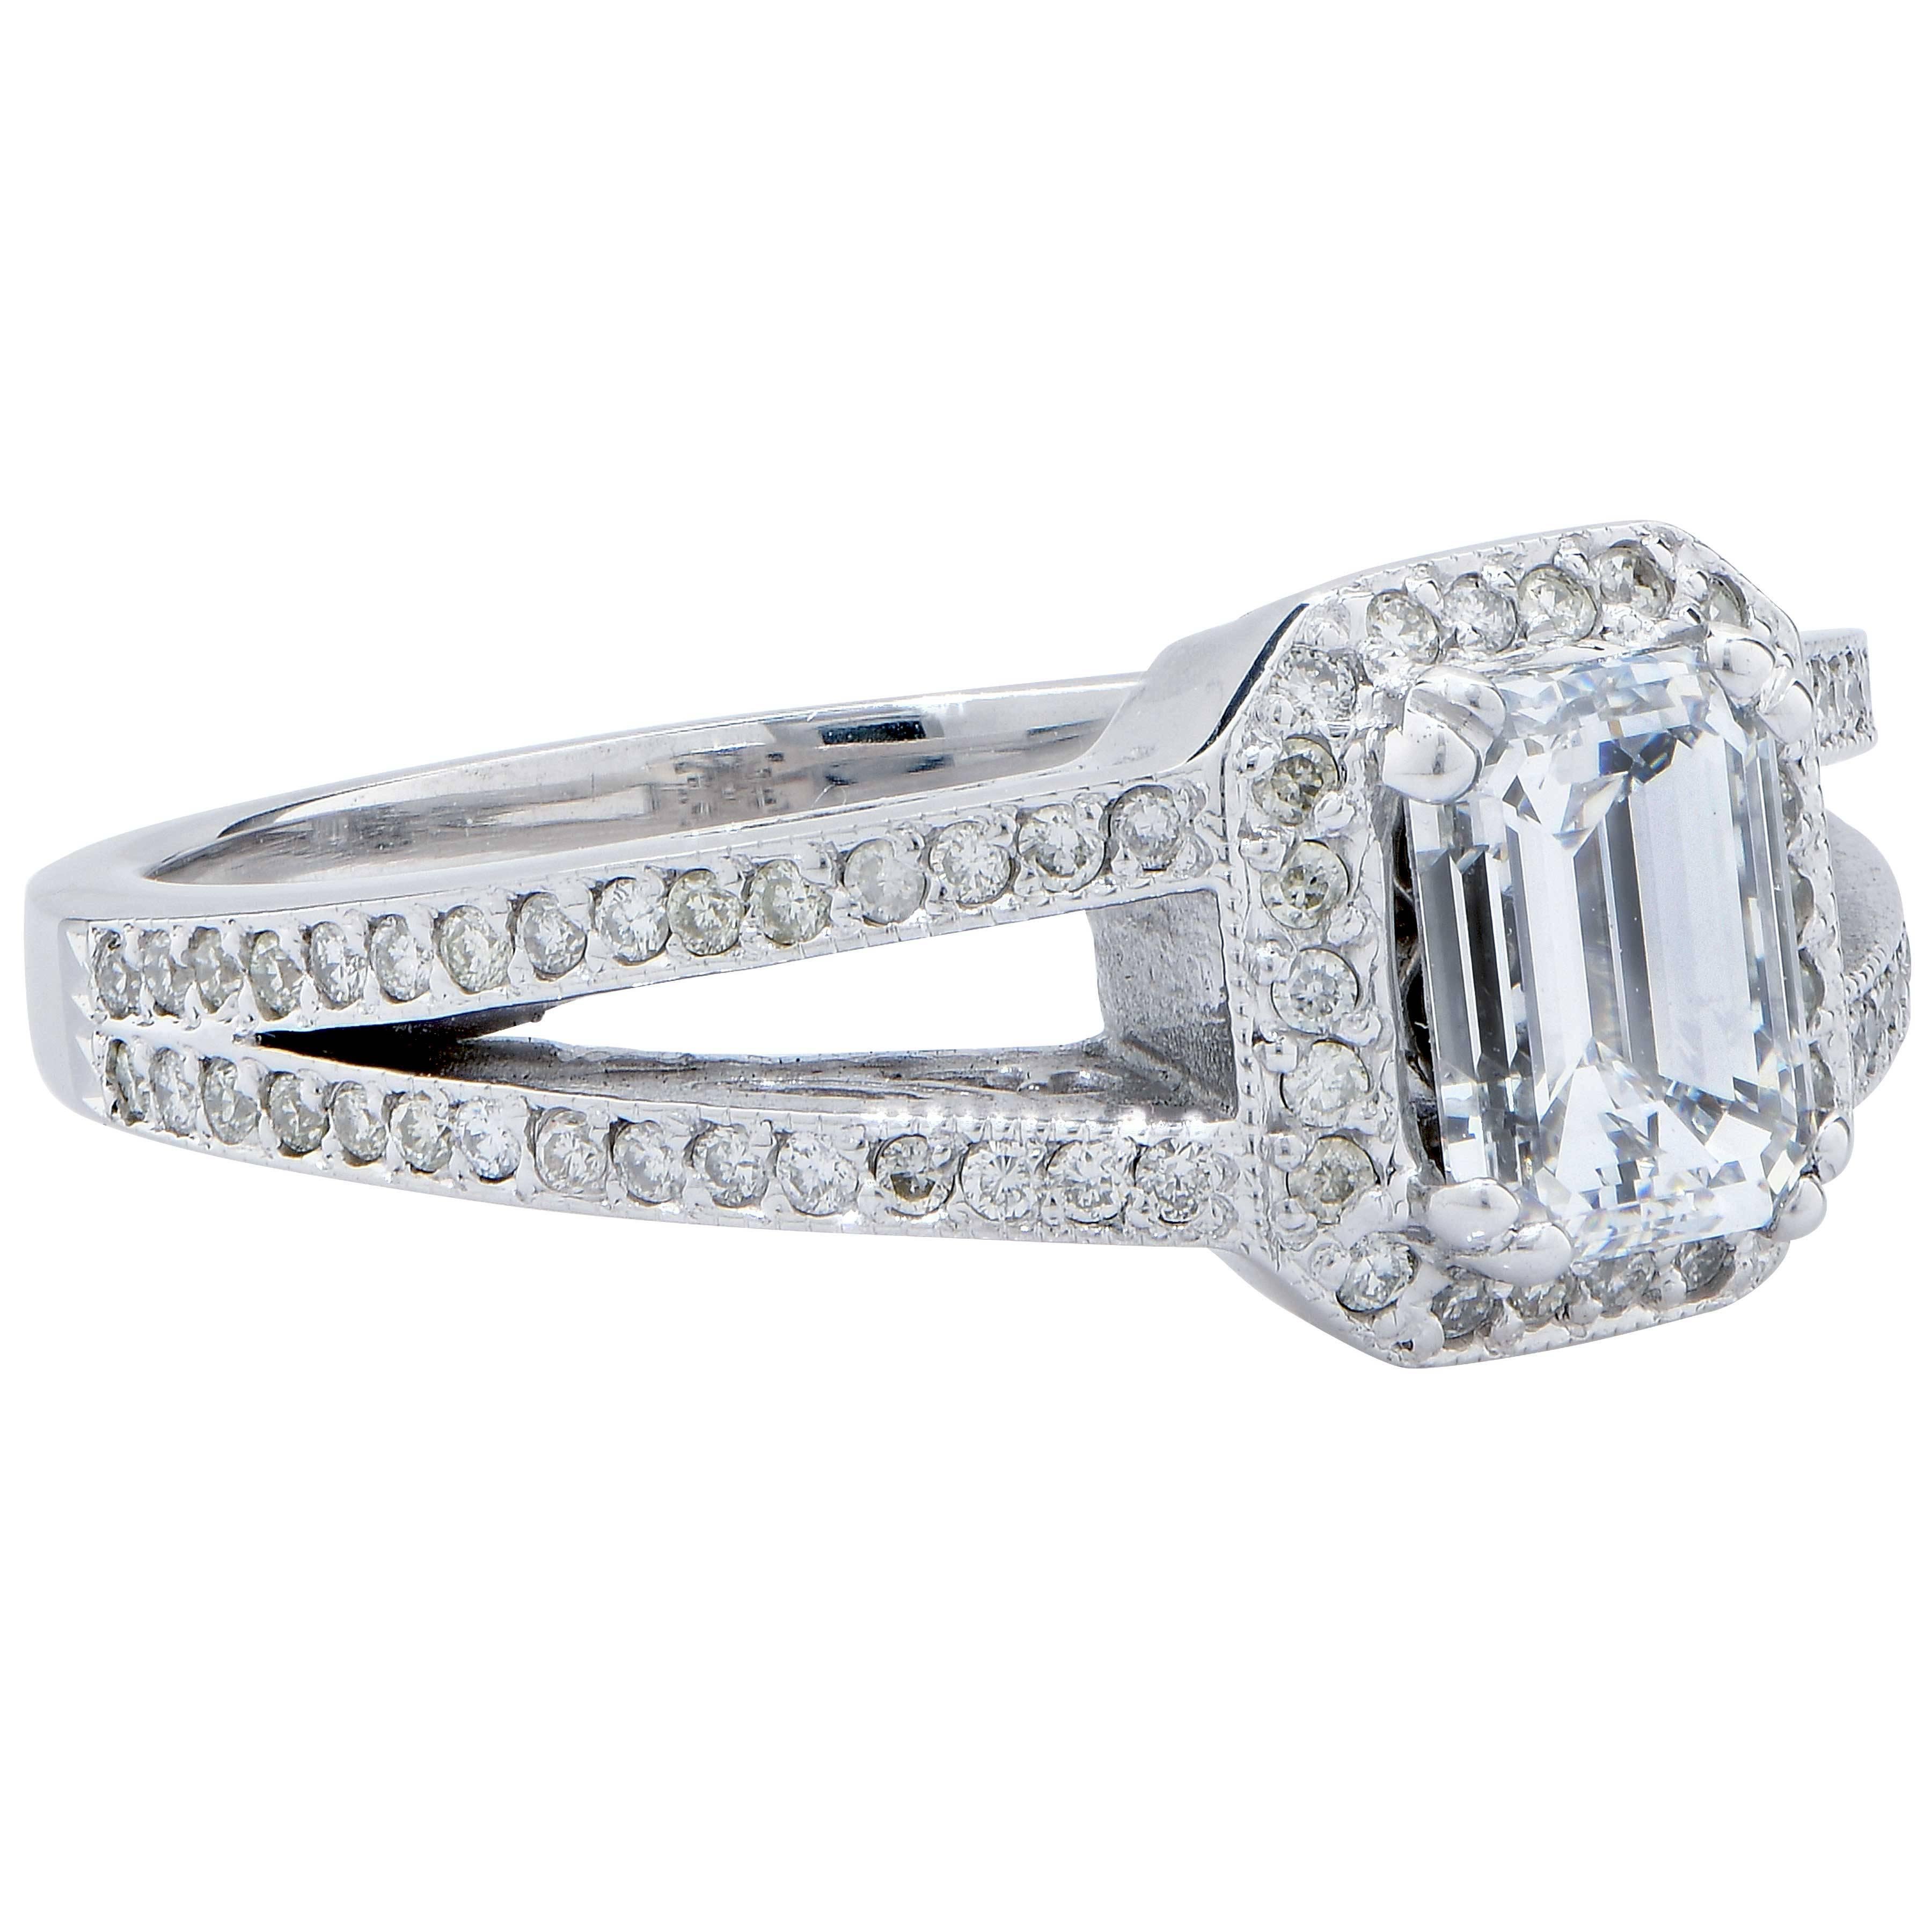 Women's or Men's 1.01 Carat GIA Graded D VVS2 Emerald Cut Diamond in 18 Karat White Gold Ring